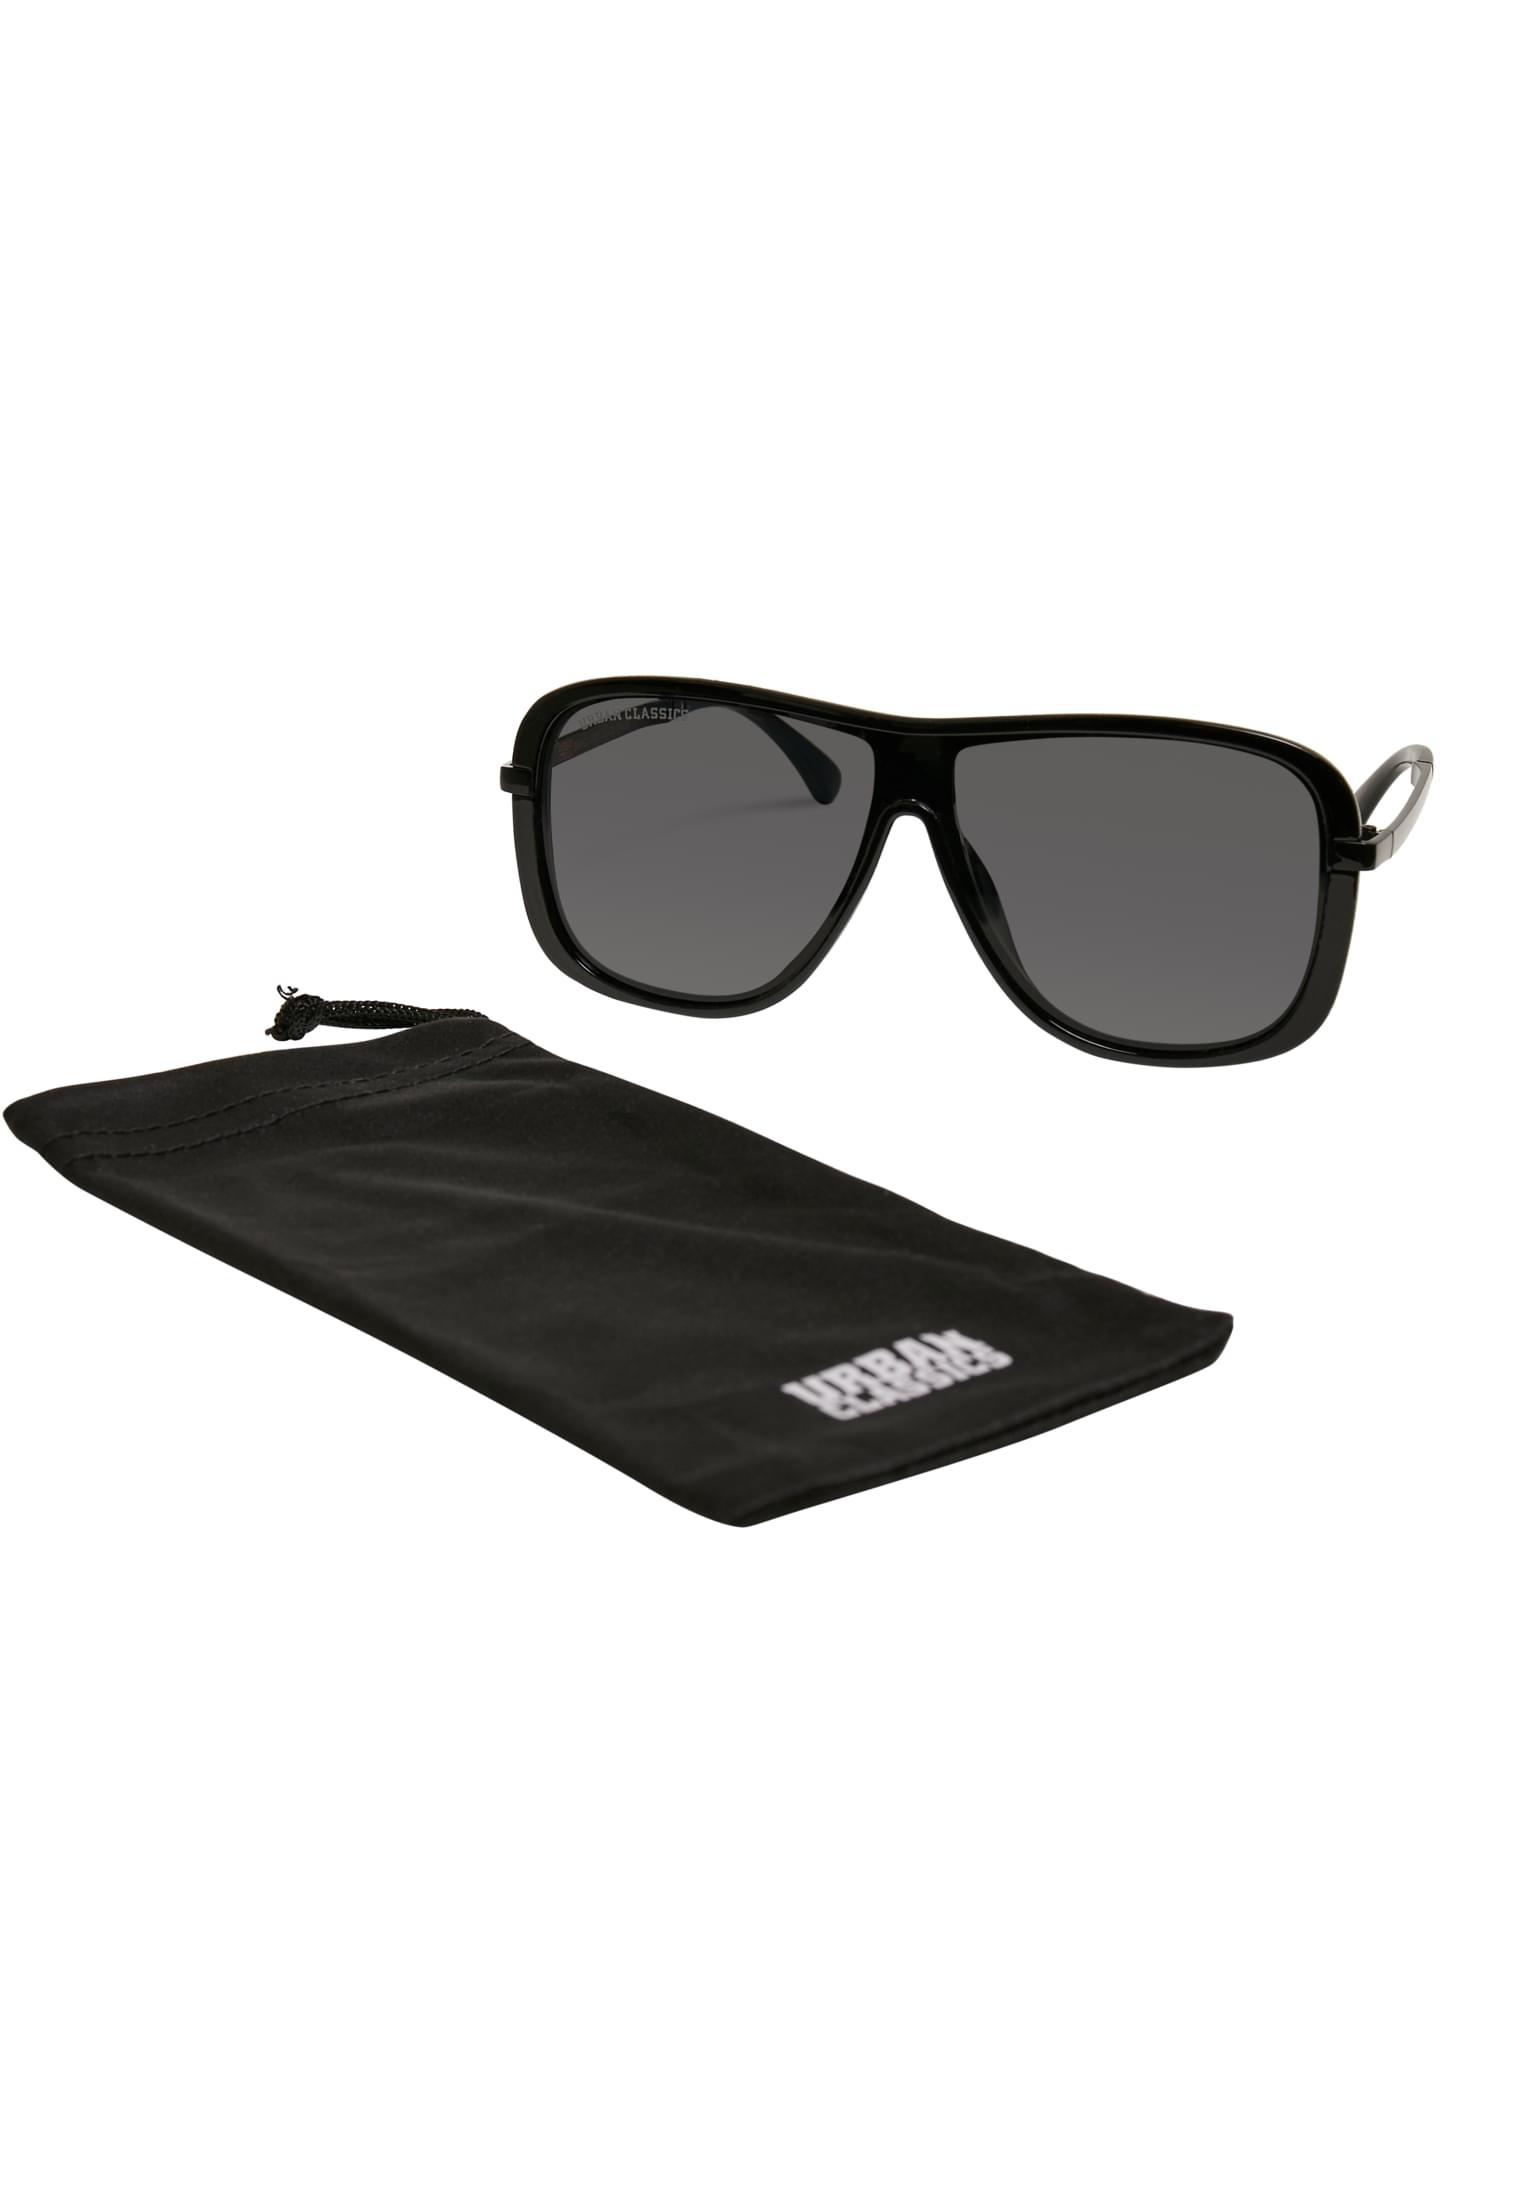 Sunglasses Milos black/black